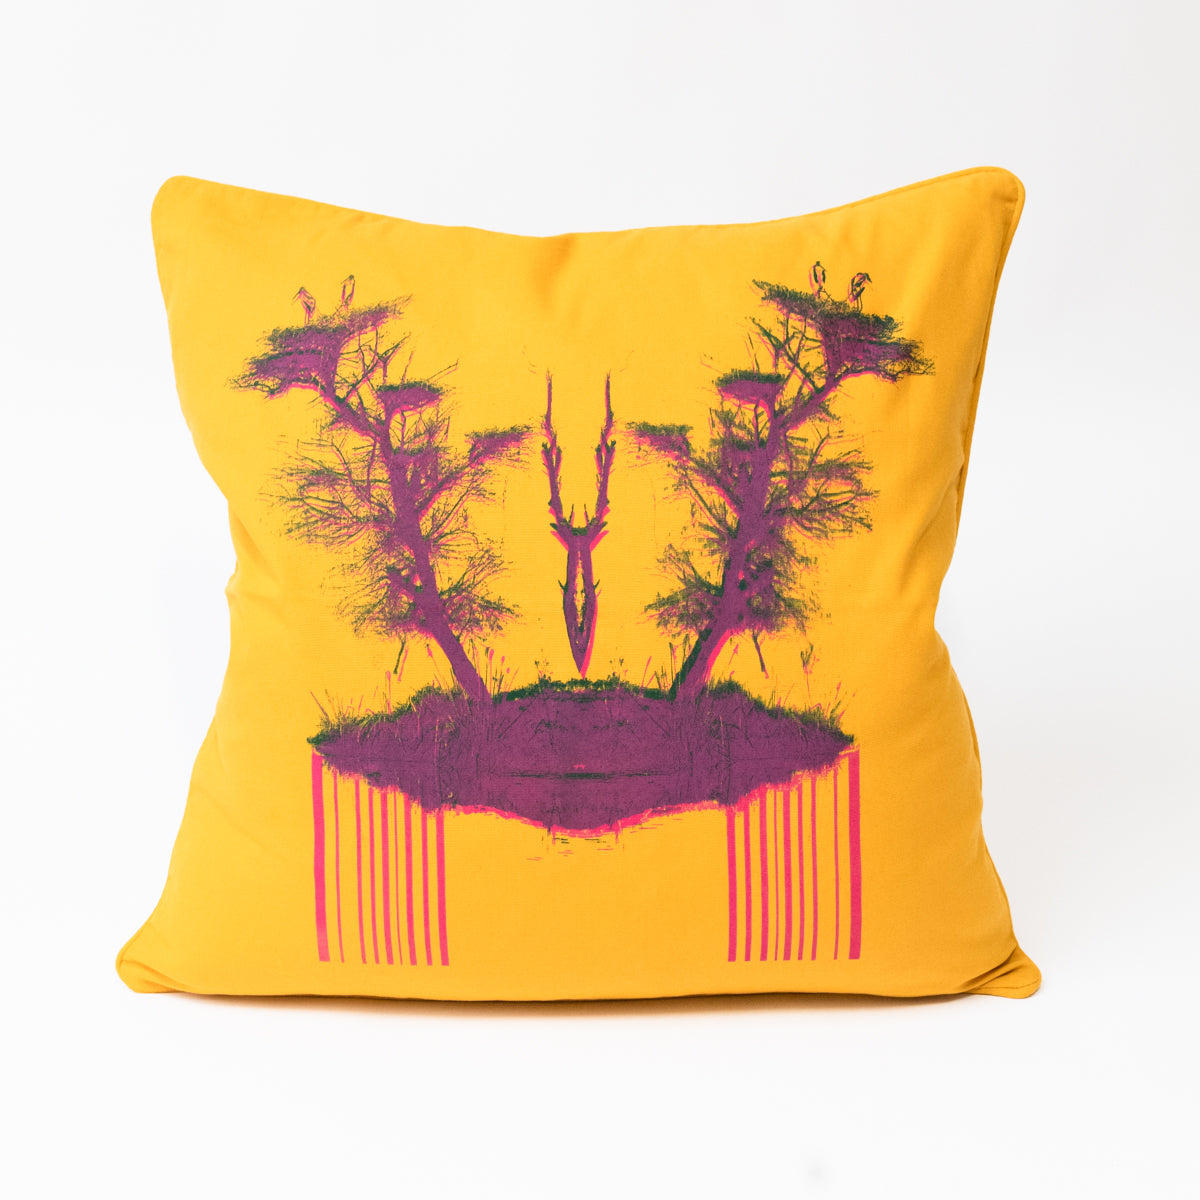 Laz Studio Storks Cushion (Orange and Pink)